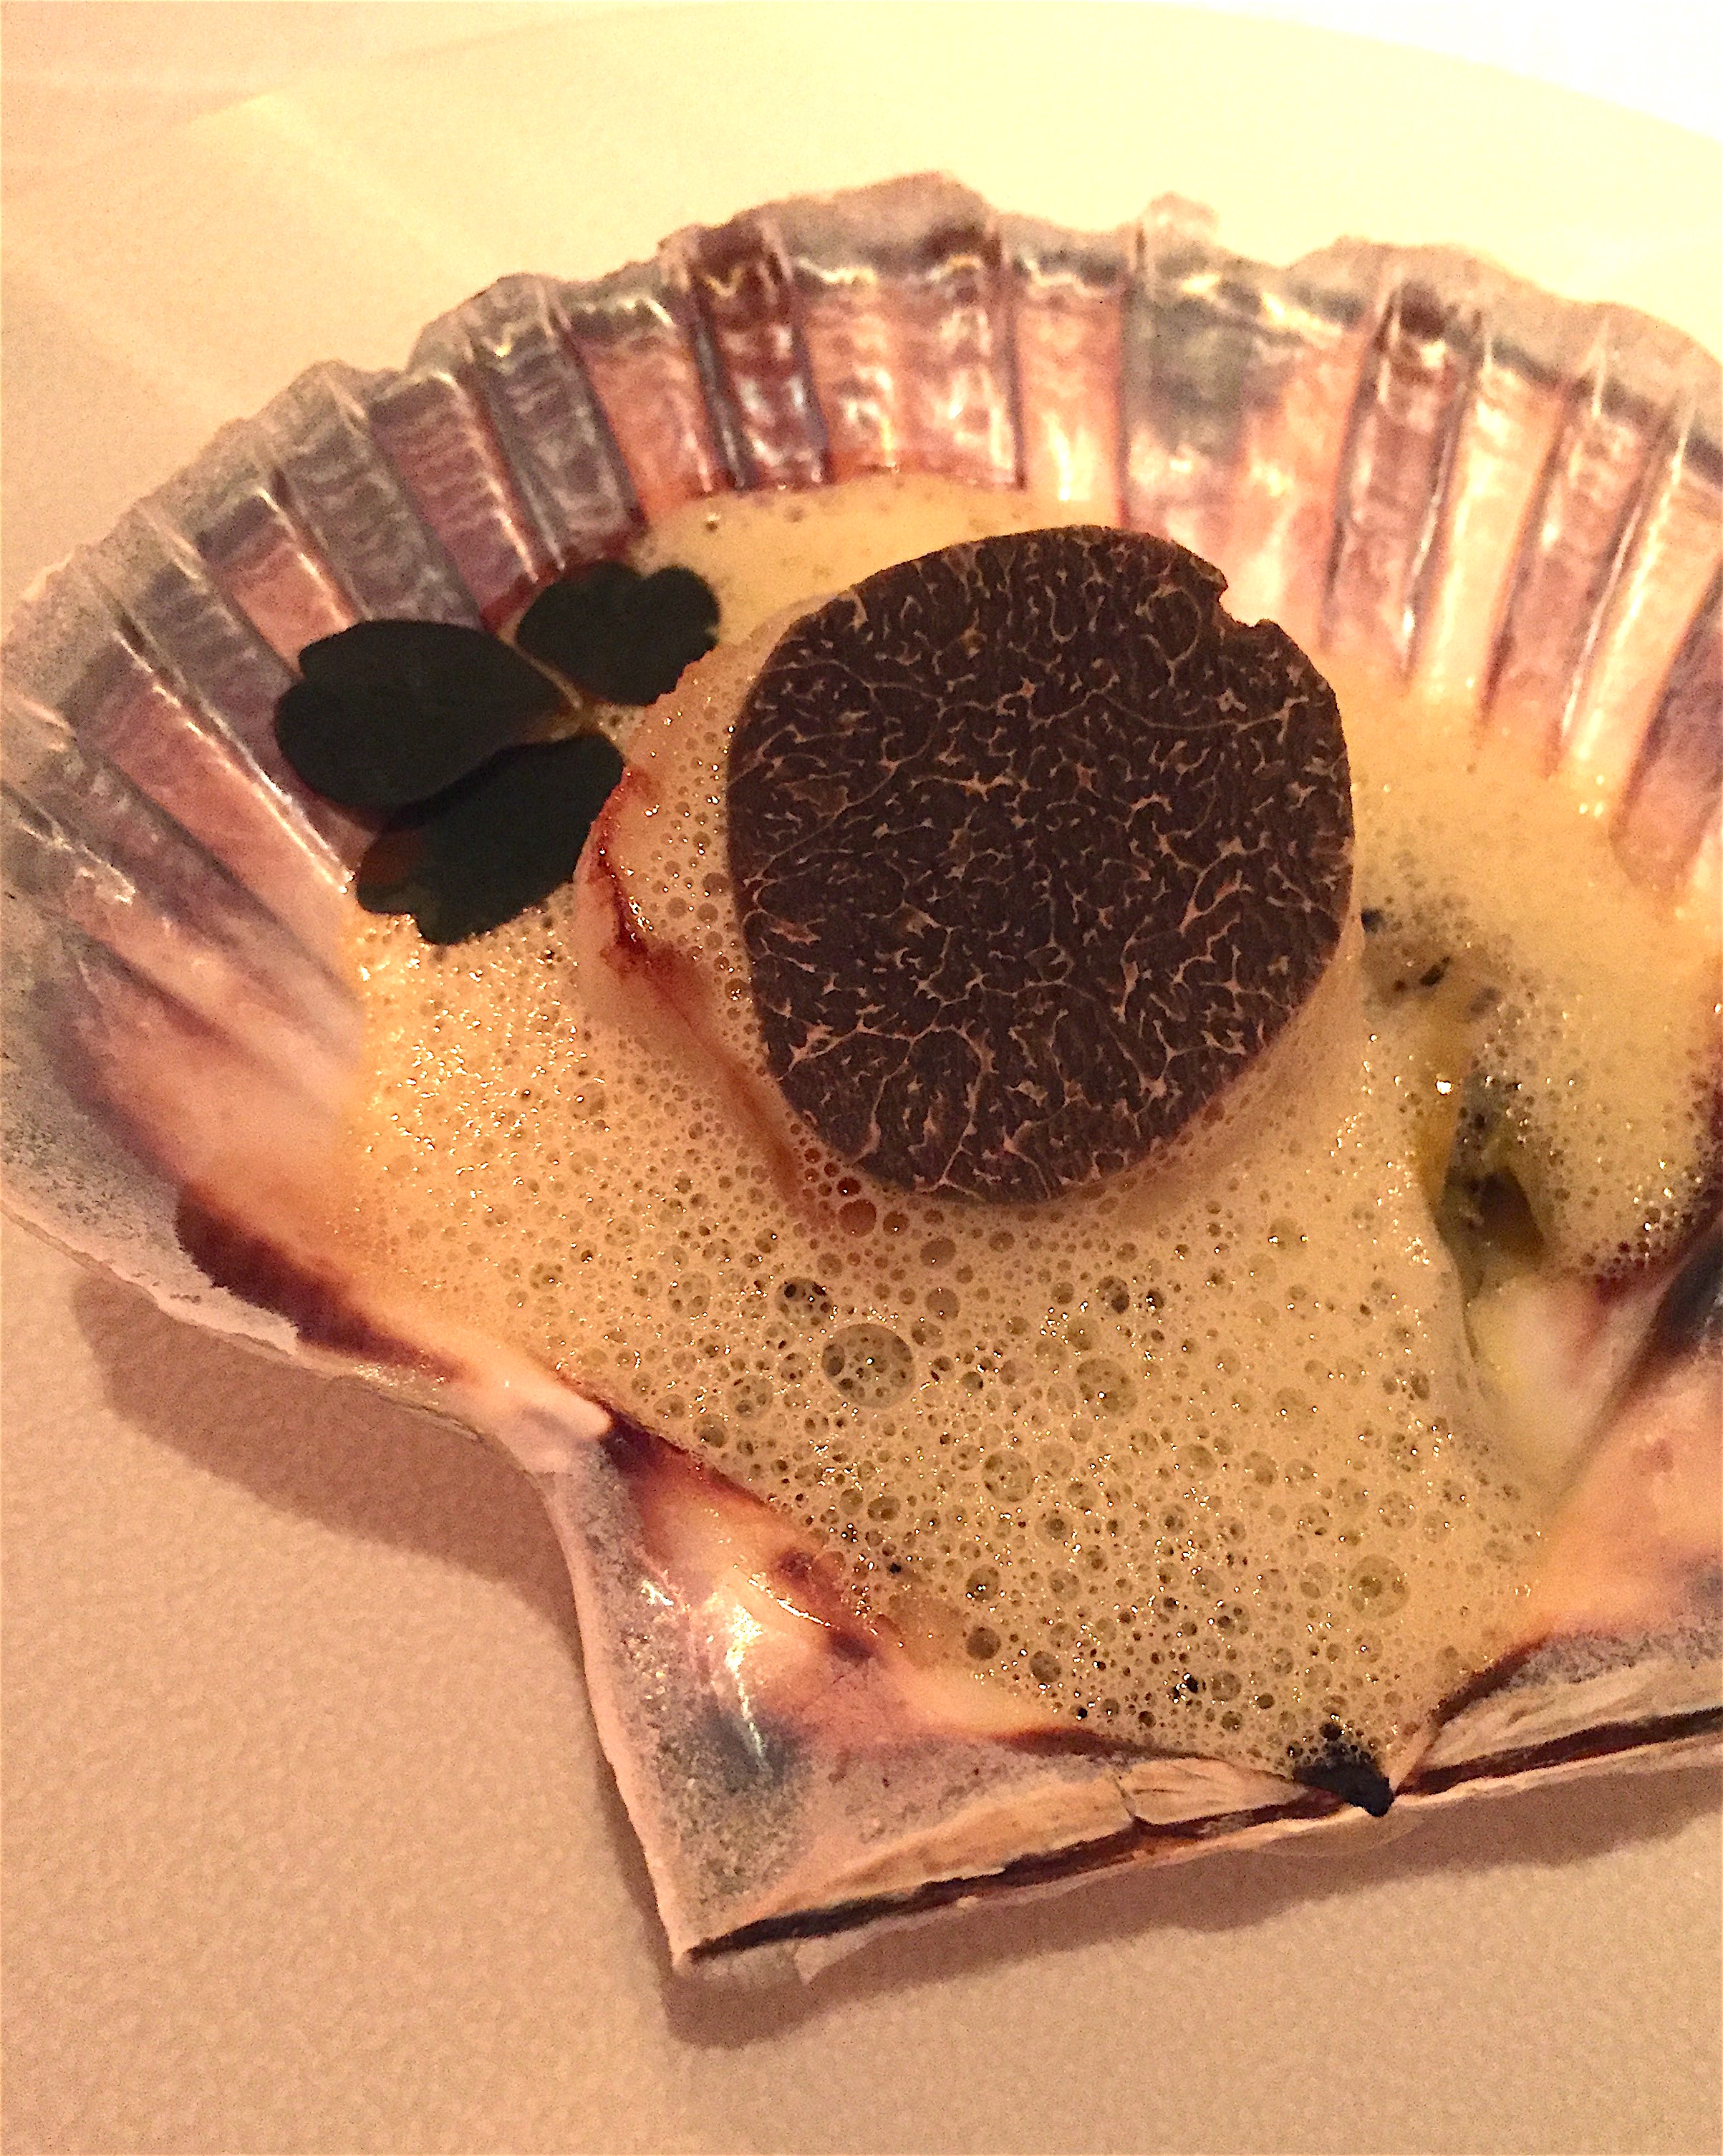 Divellec - scallop with black truffle @Alexander Lobrano